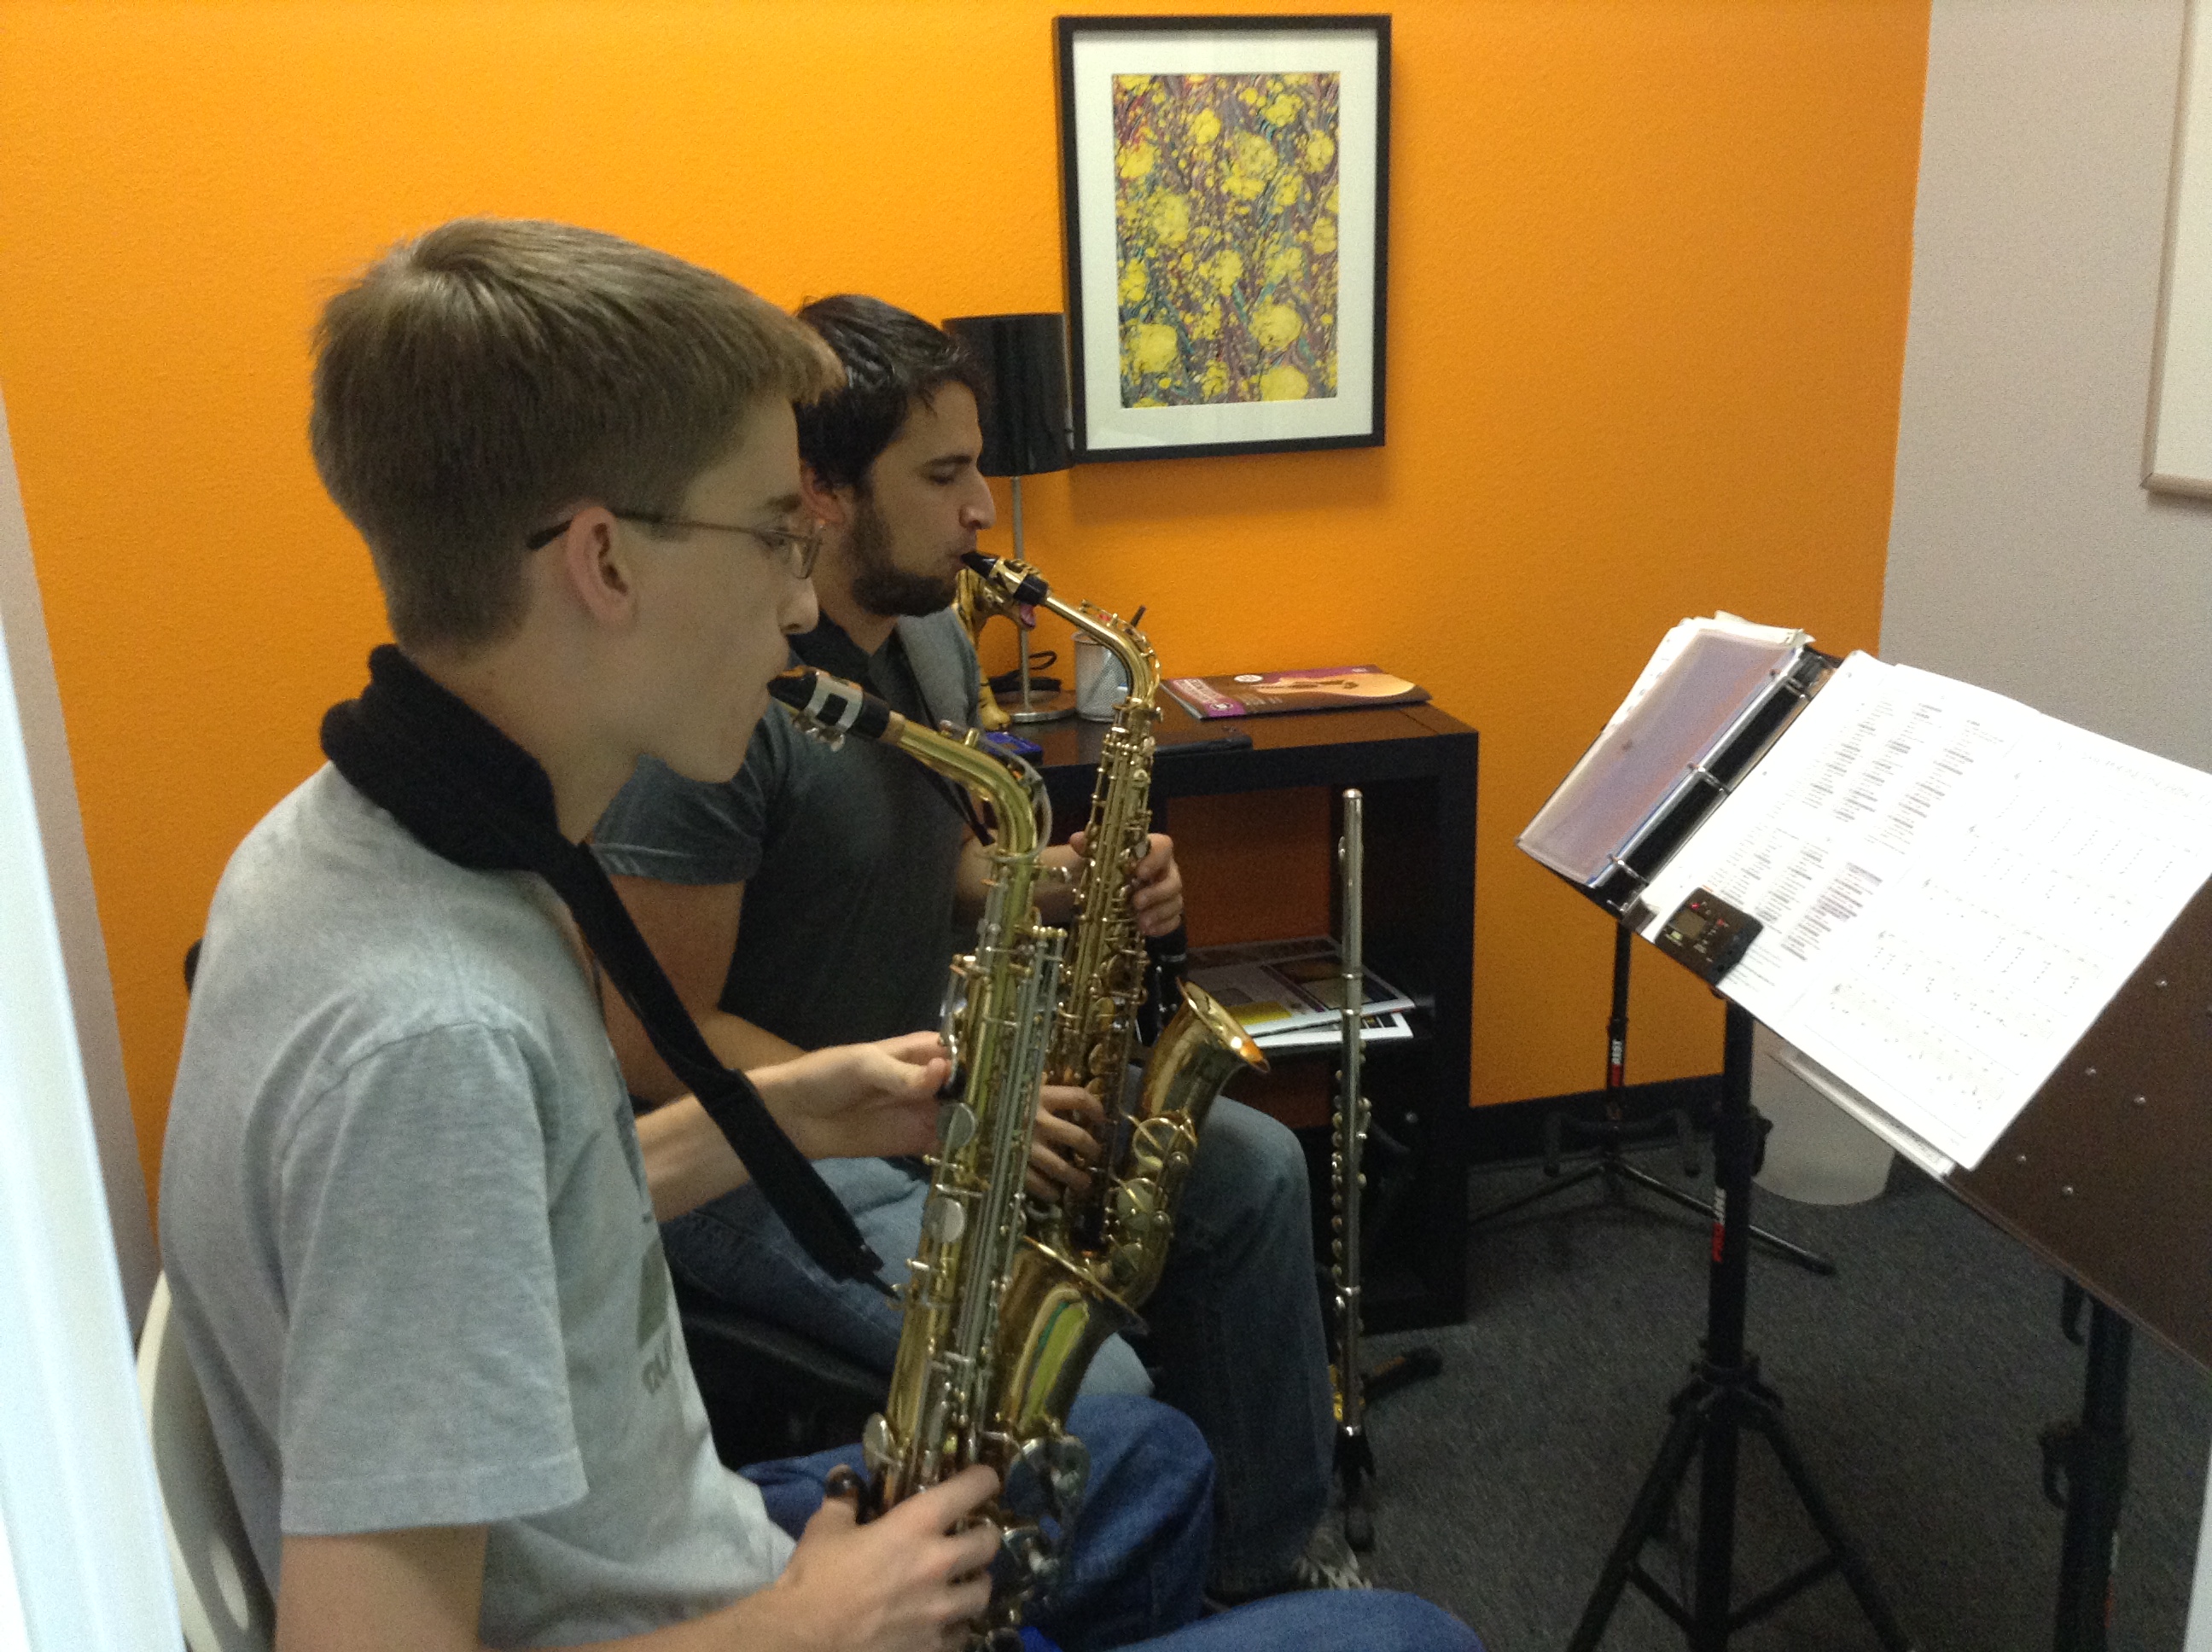 Saxohone lessons in Temecula, CA